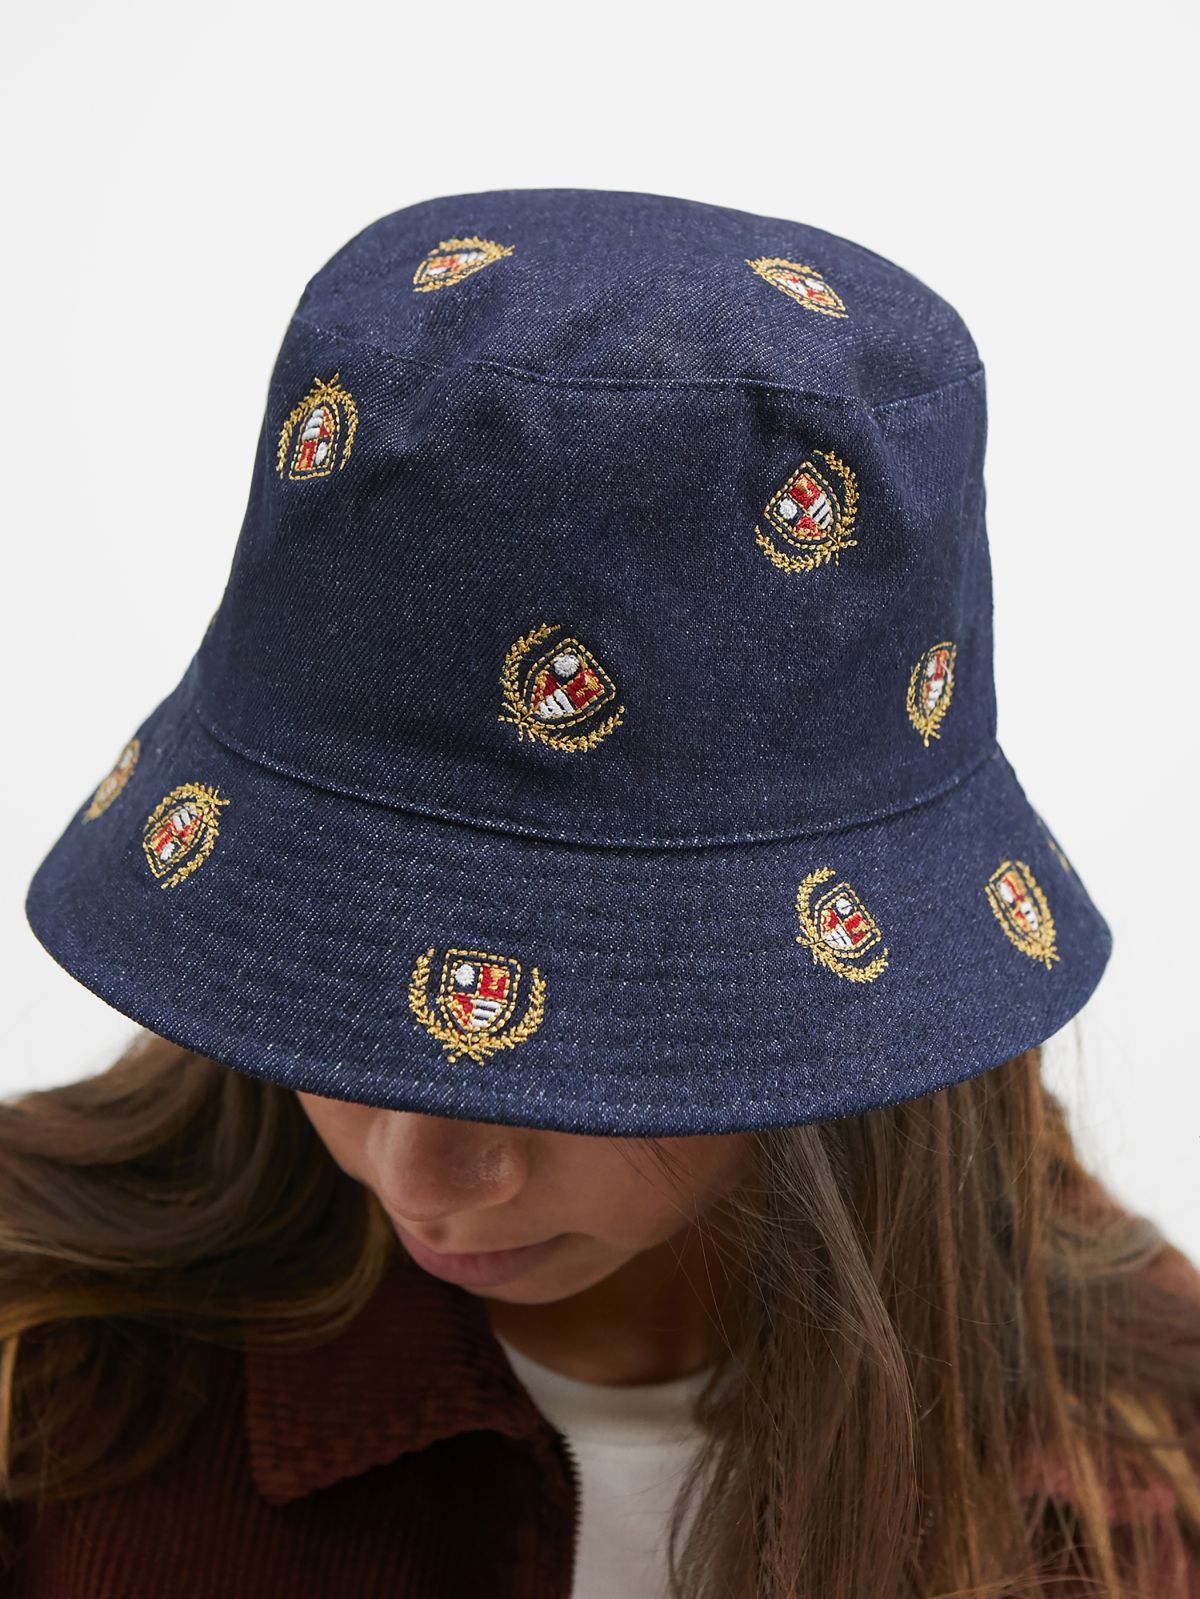  כובע באקט ג'ינס עם רקמה של URBAN OUTFITTERS